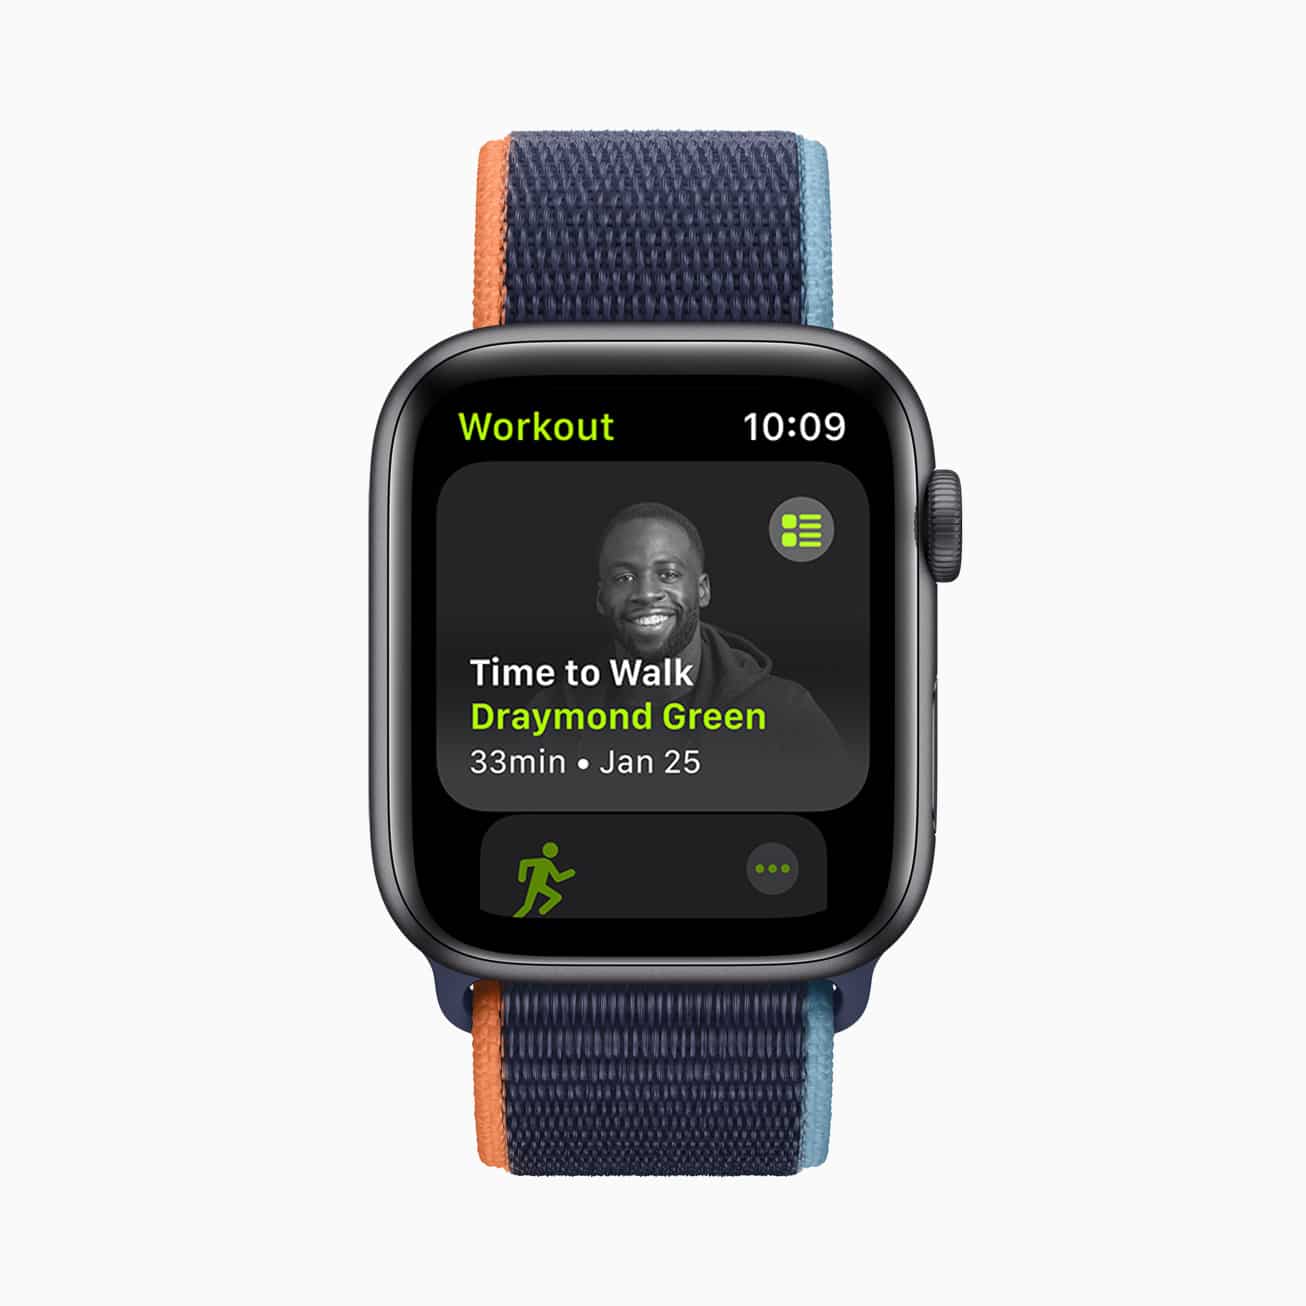 Apple Startet 'Time to Walk': Promi-Audio-Workouts für Apple Fitness+ 262